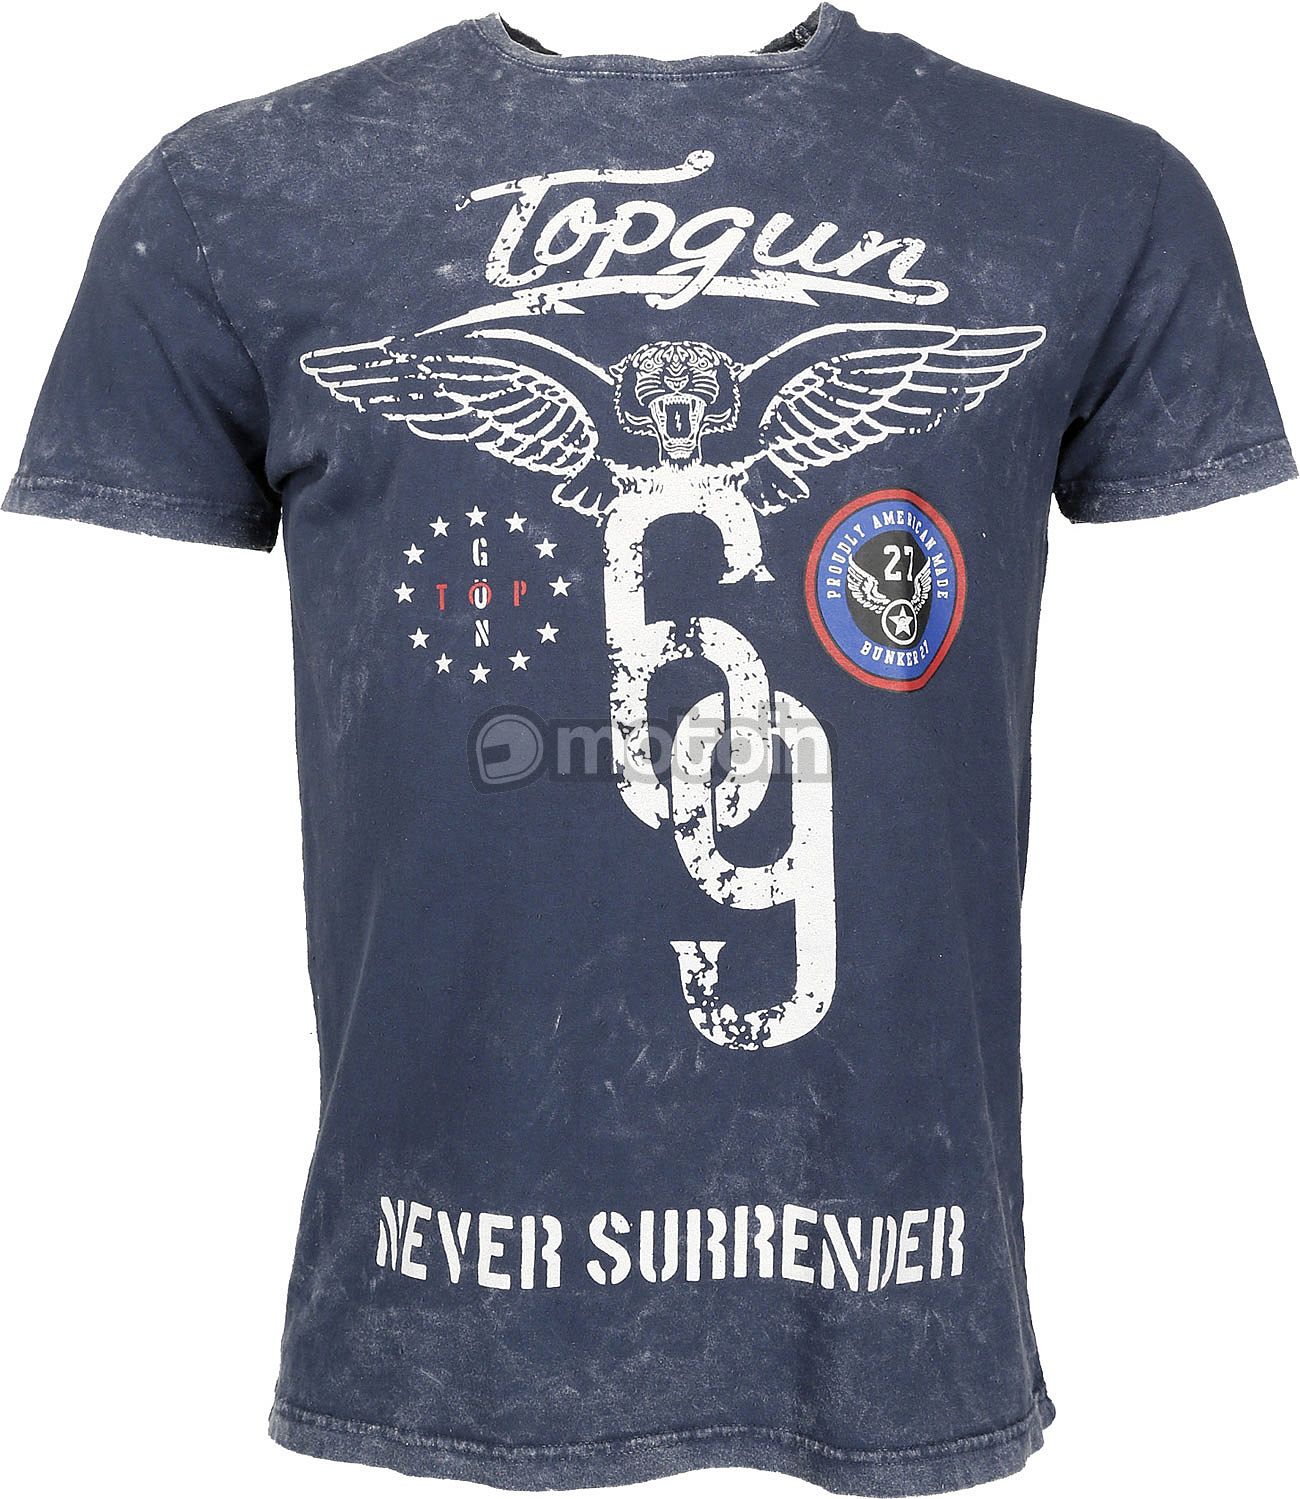 Top Gun Flags, camiseta